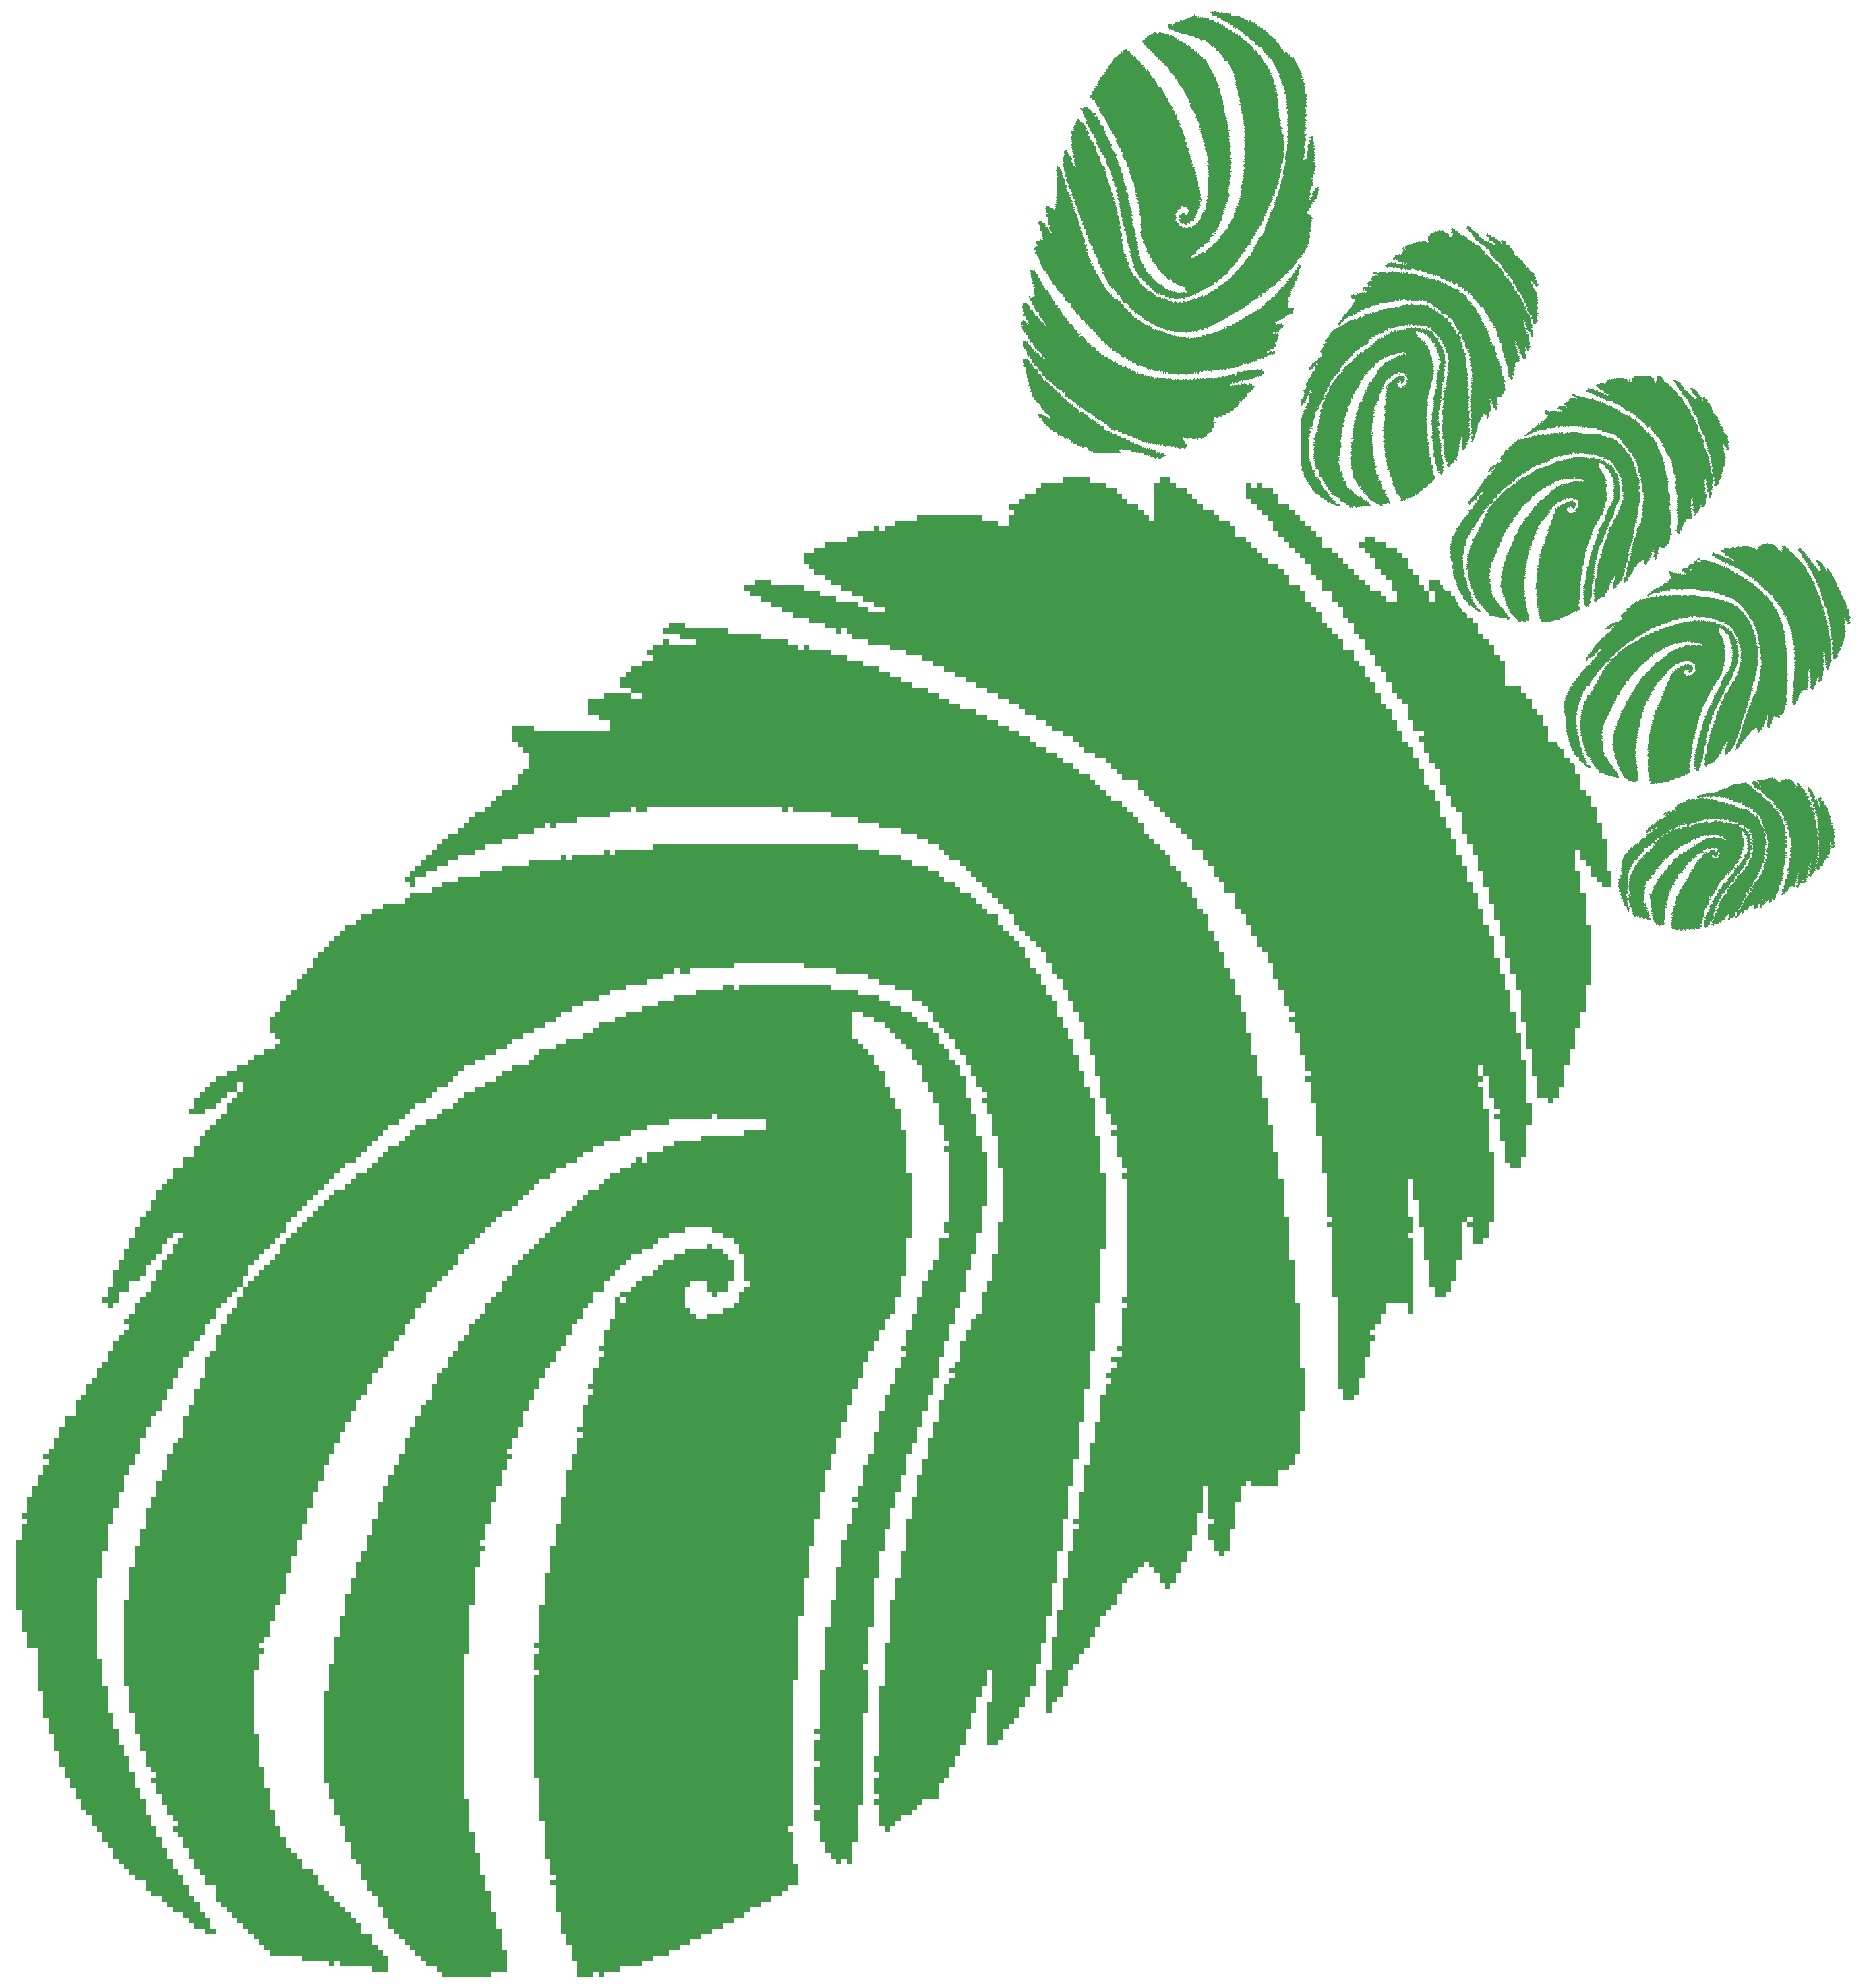 Home Energy Services company logo